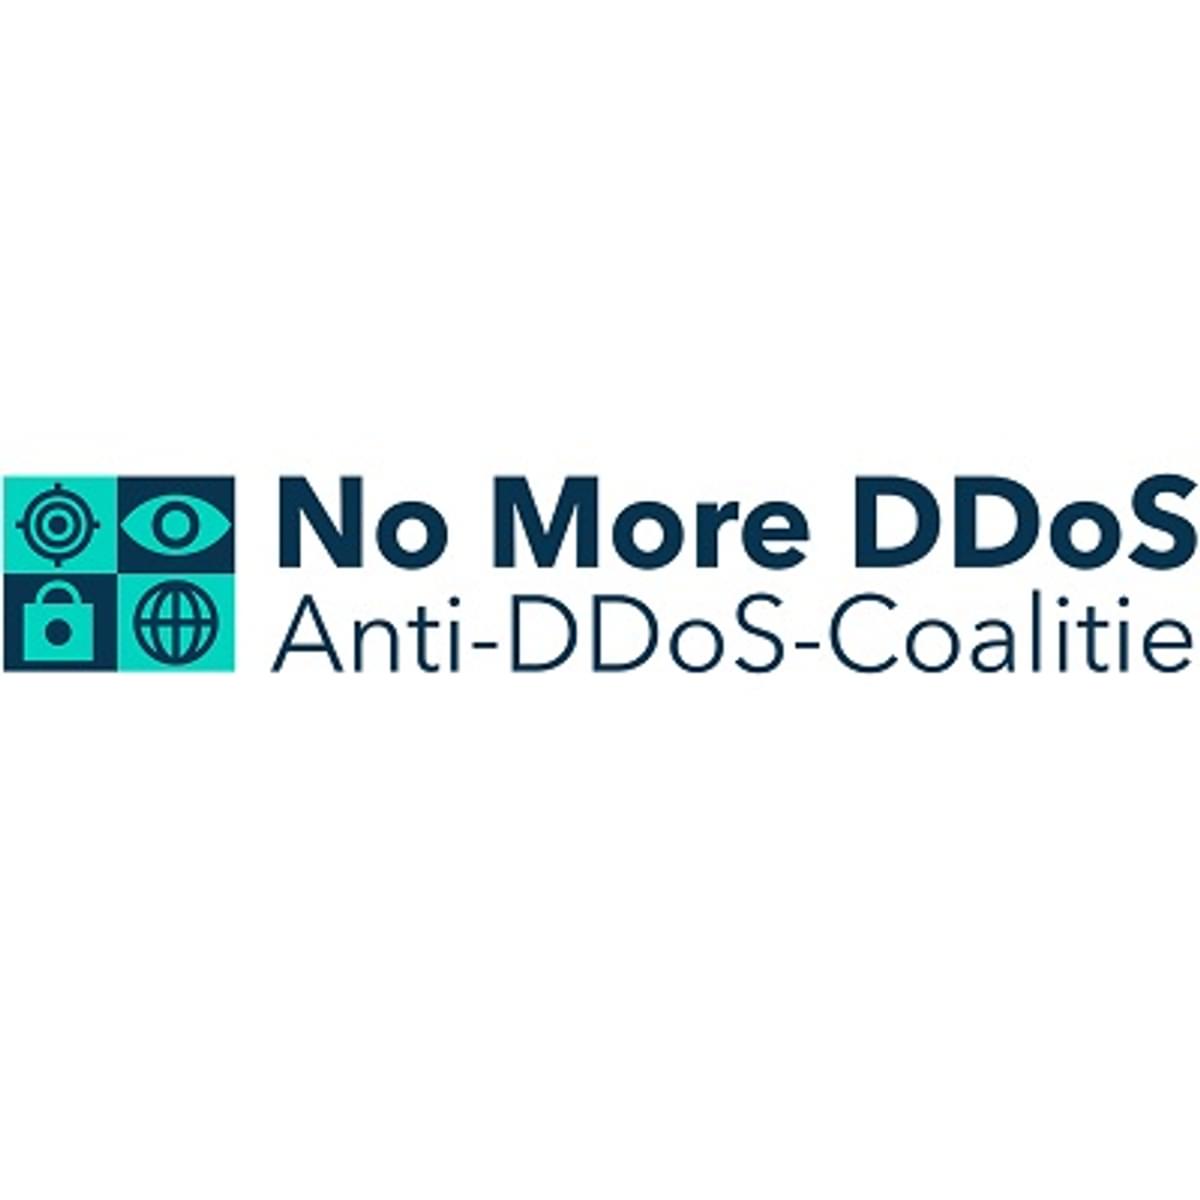 Nationale anti-DDoS coalitie lanceert website nomoreddos.org image